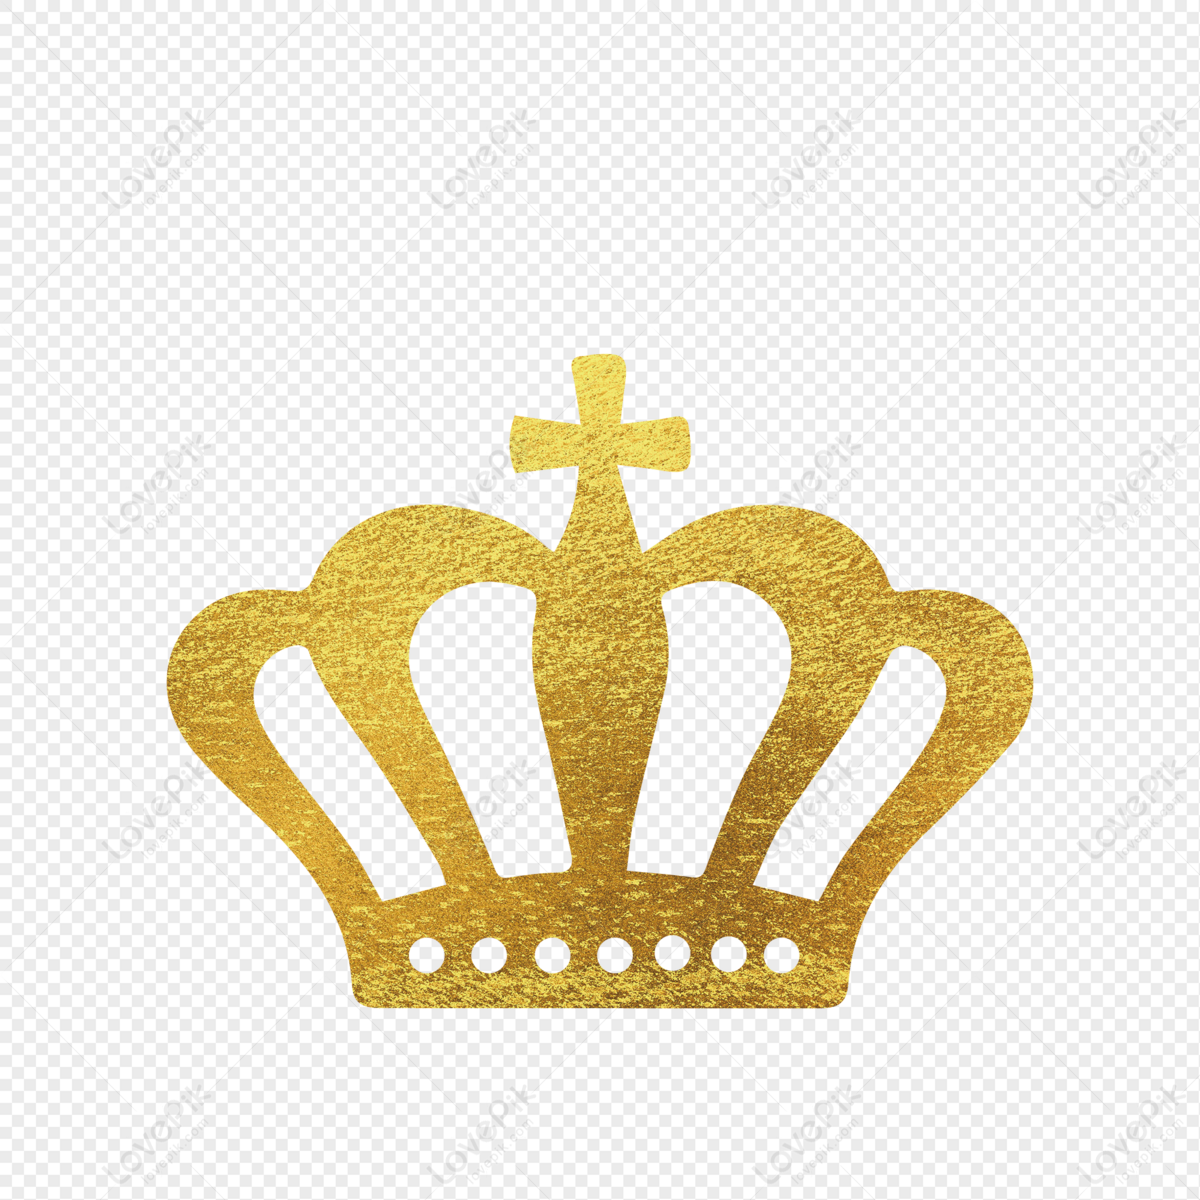 https://img.lovepik.com/free-png/20210927/lovepik-golden-crown-png-image_401529554_wh1200.png